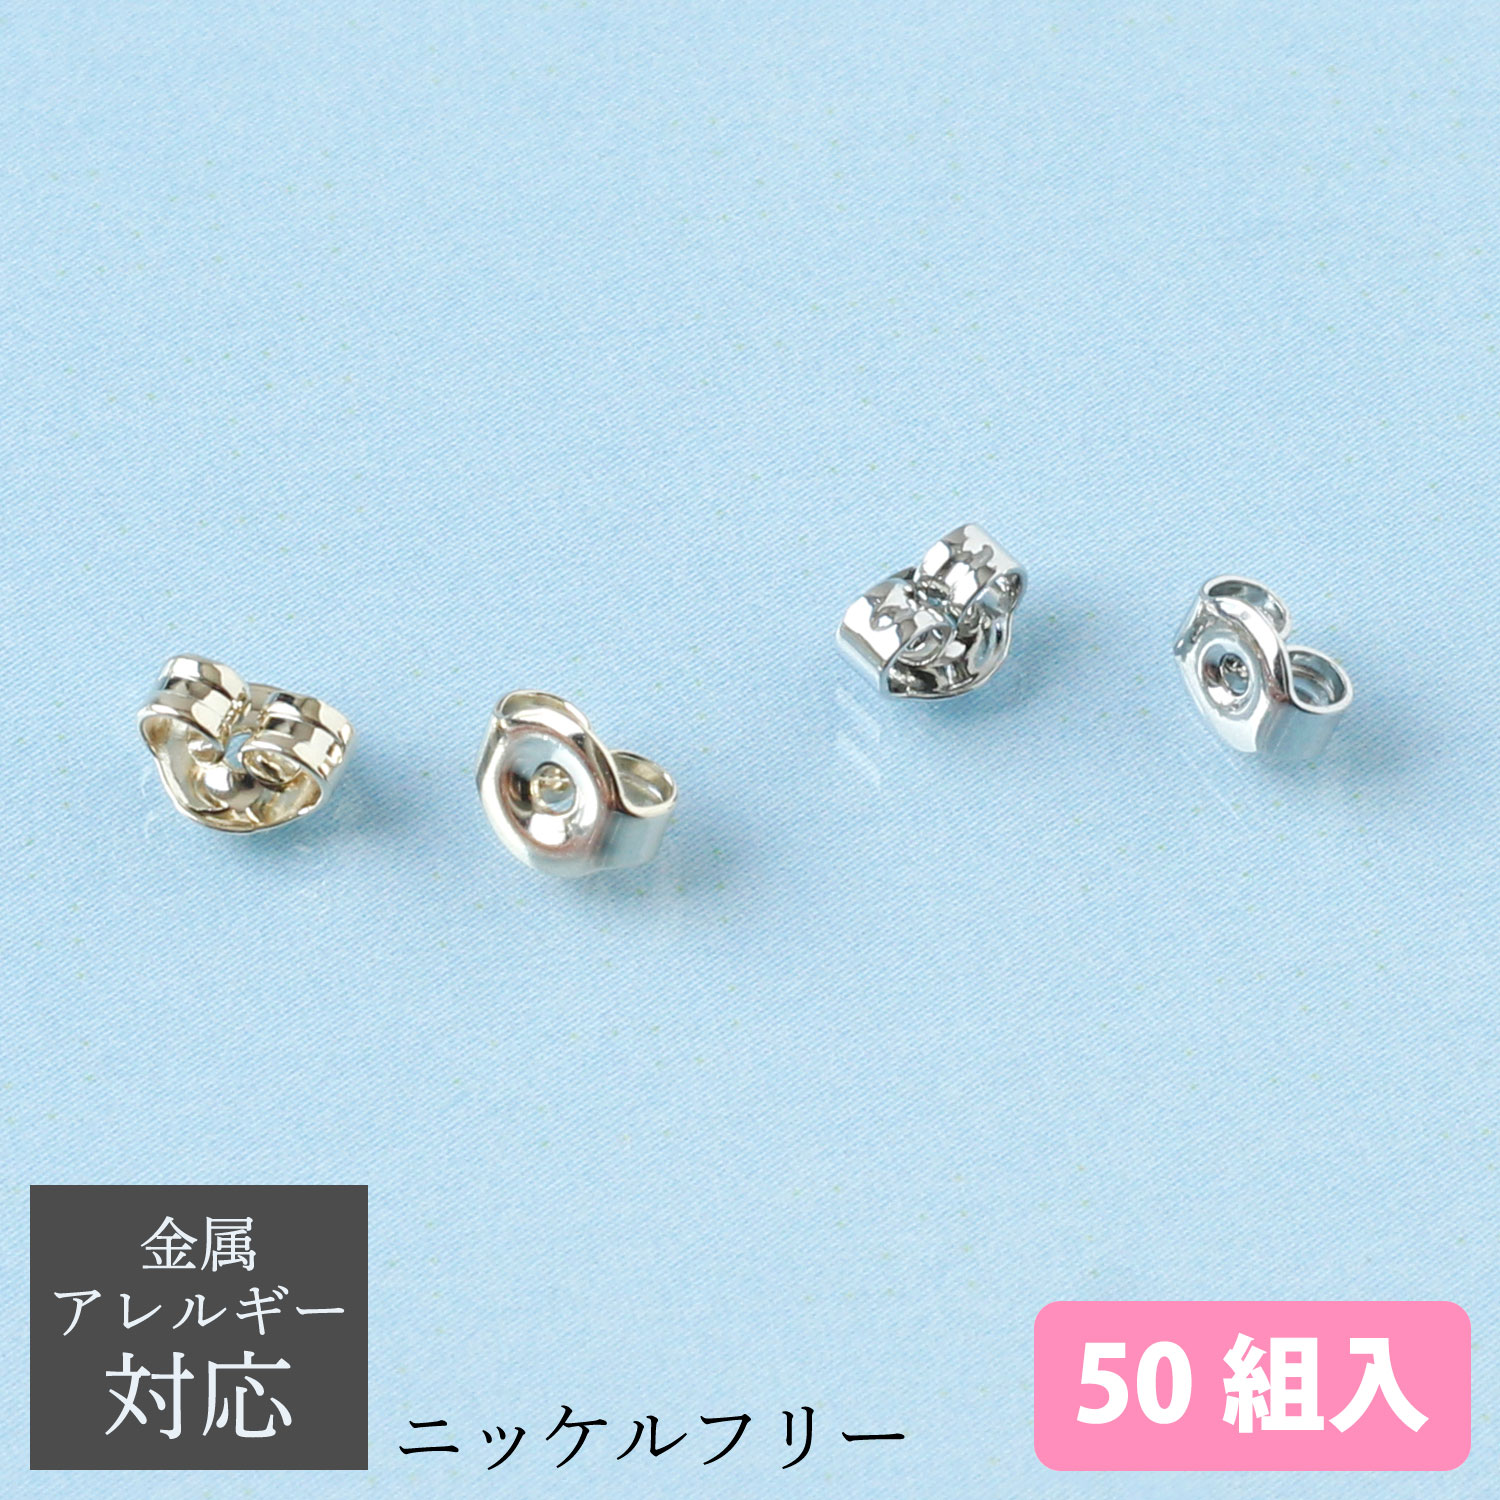 KE1505-50 Nickel-free earring catches 50 pairs (pack)